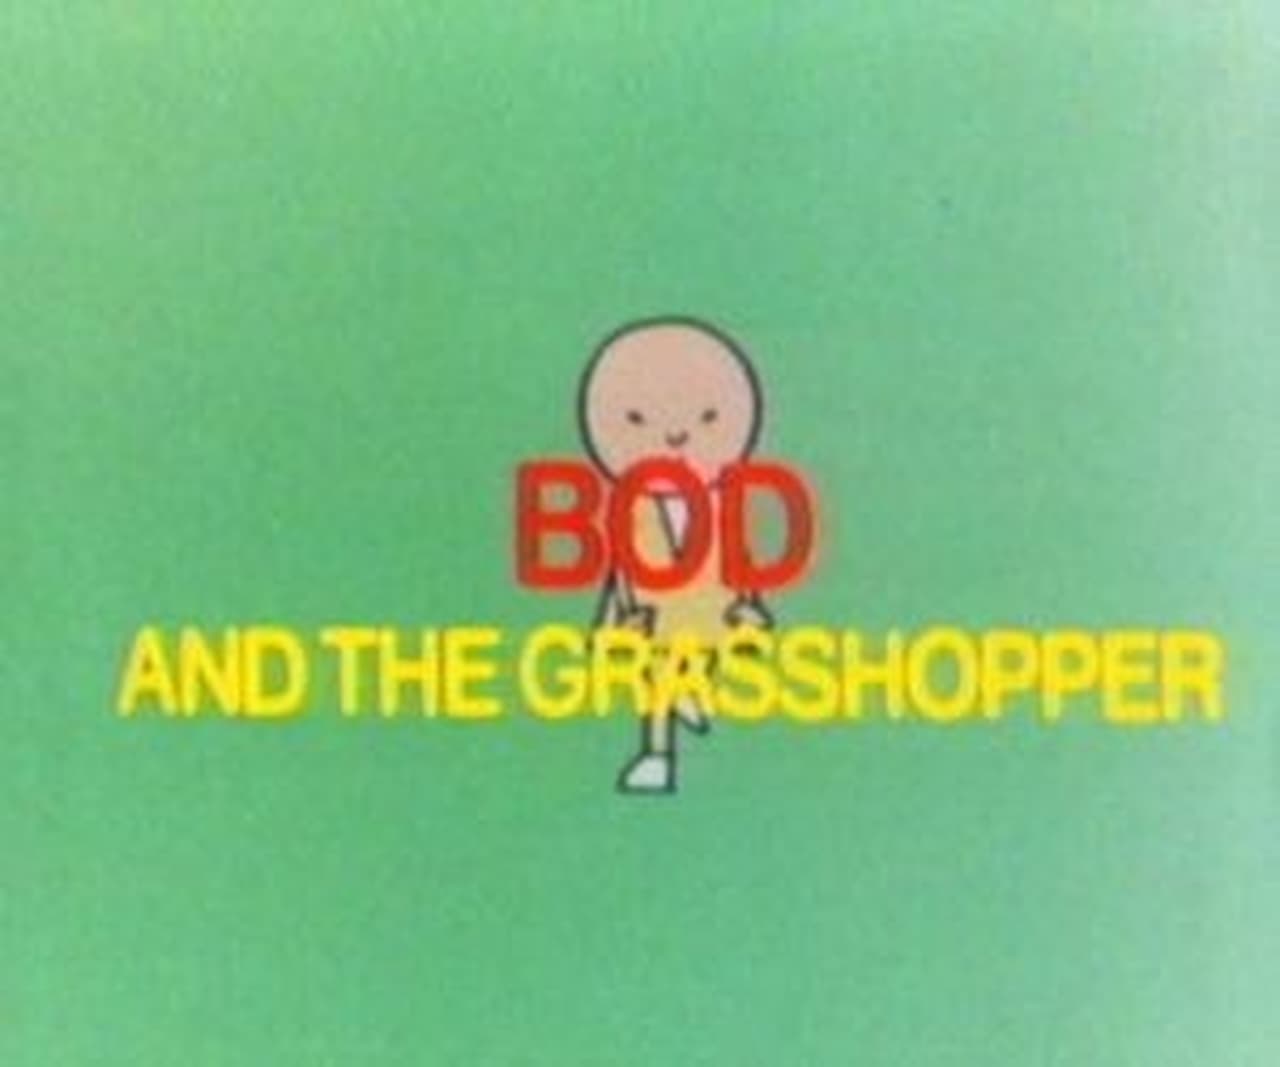 Bod and the Grasshopper